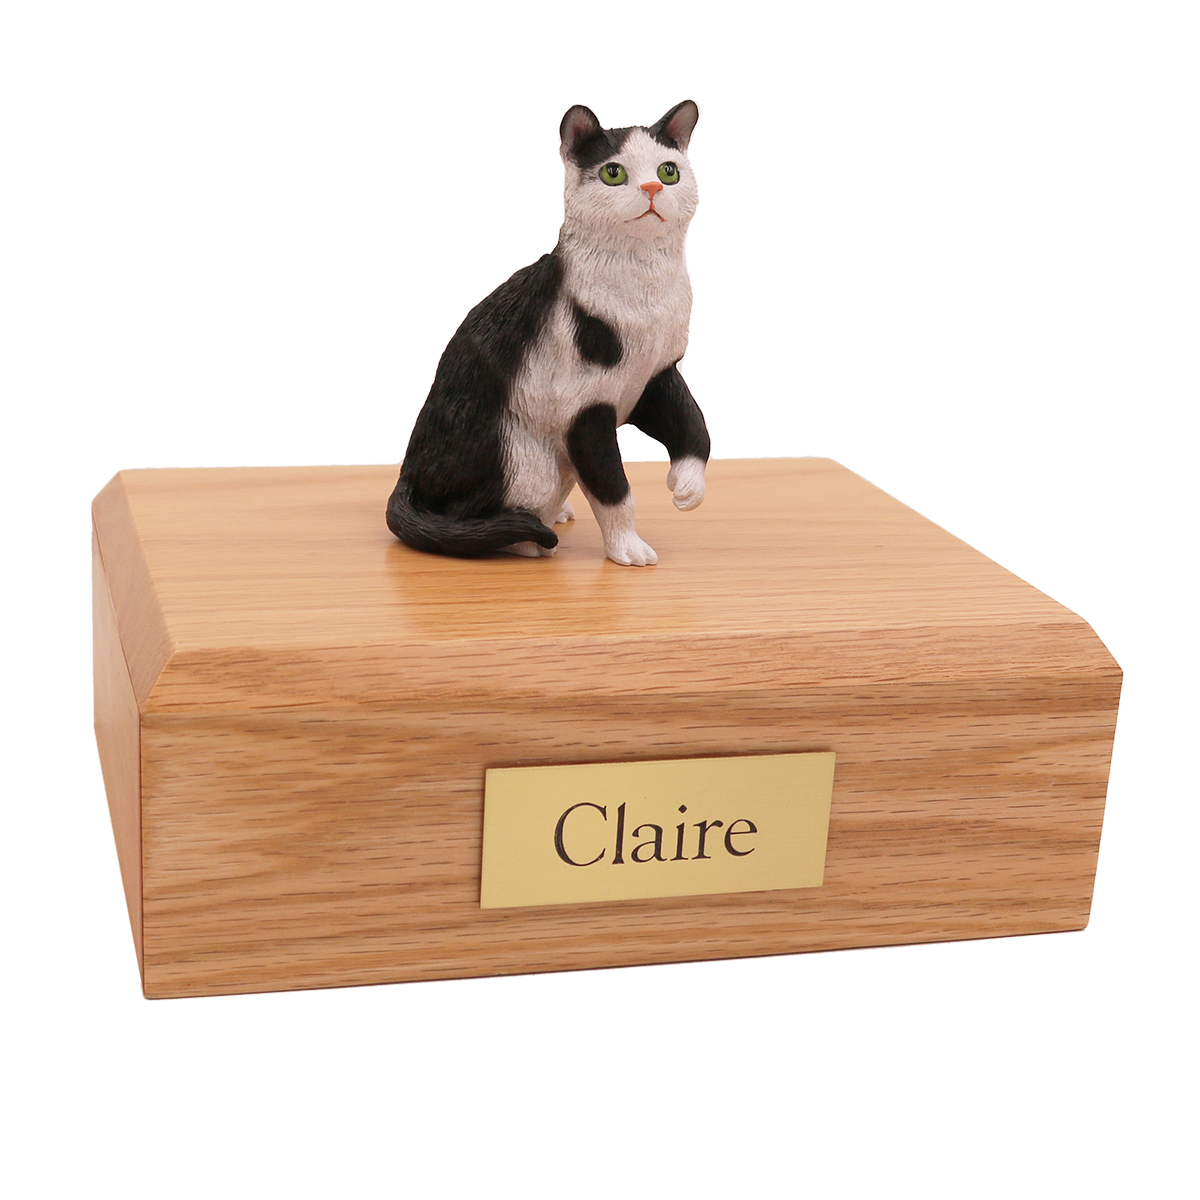 Cat, Black/White, Short hair Sitting - Figurine Urn